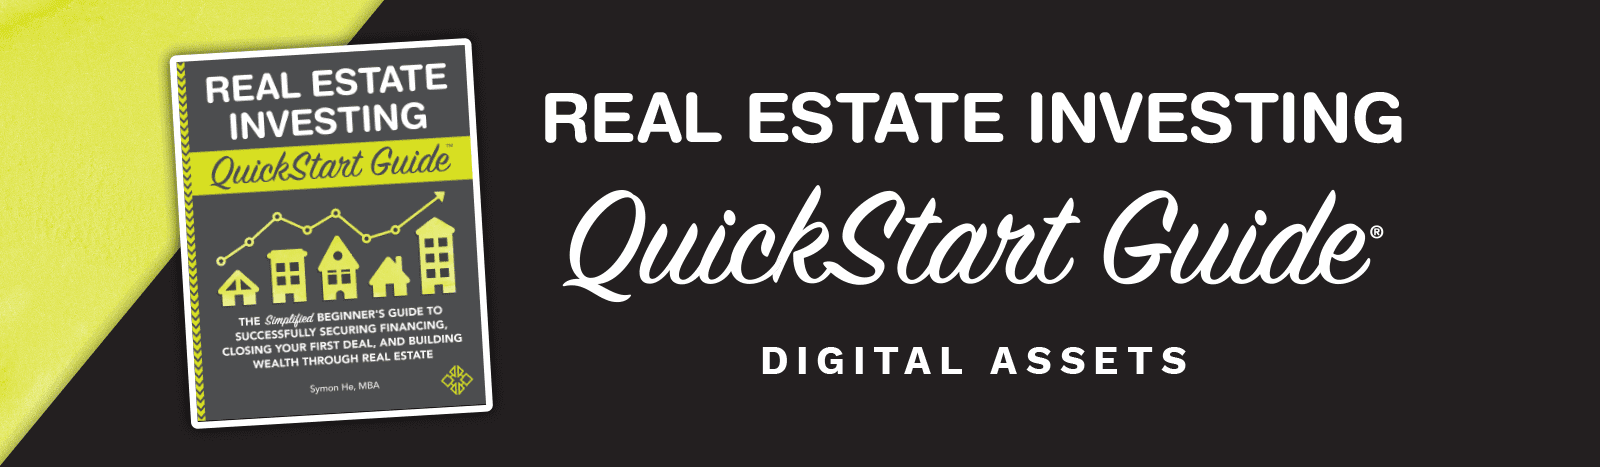 Real Estate Investing QuickStart Guide Header